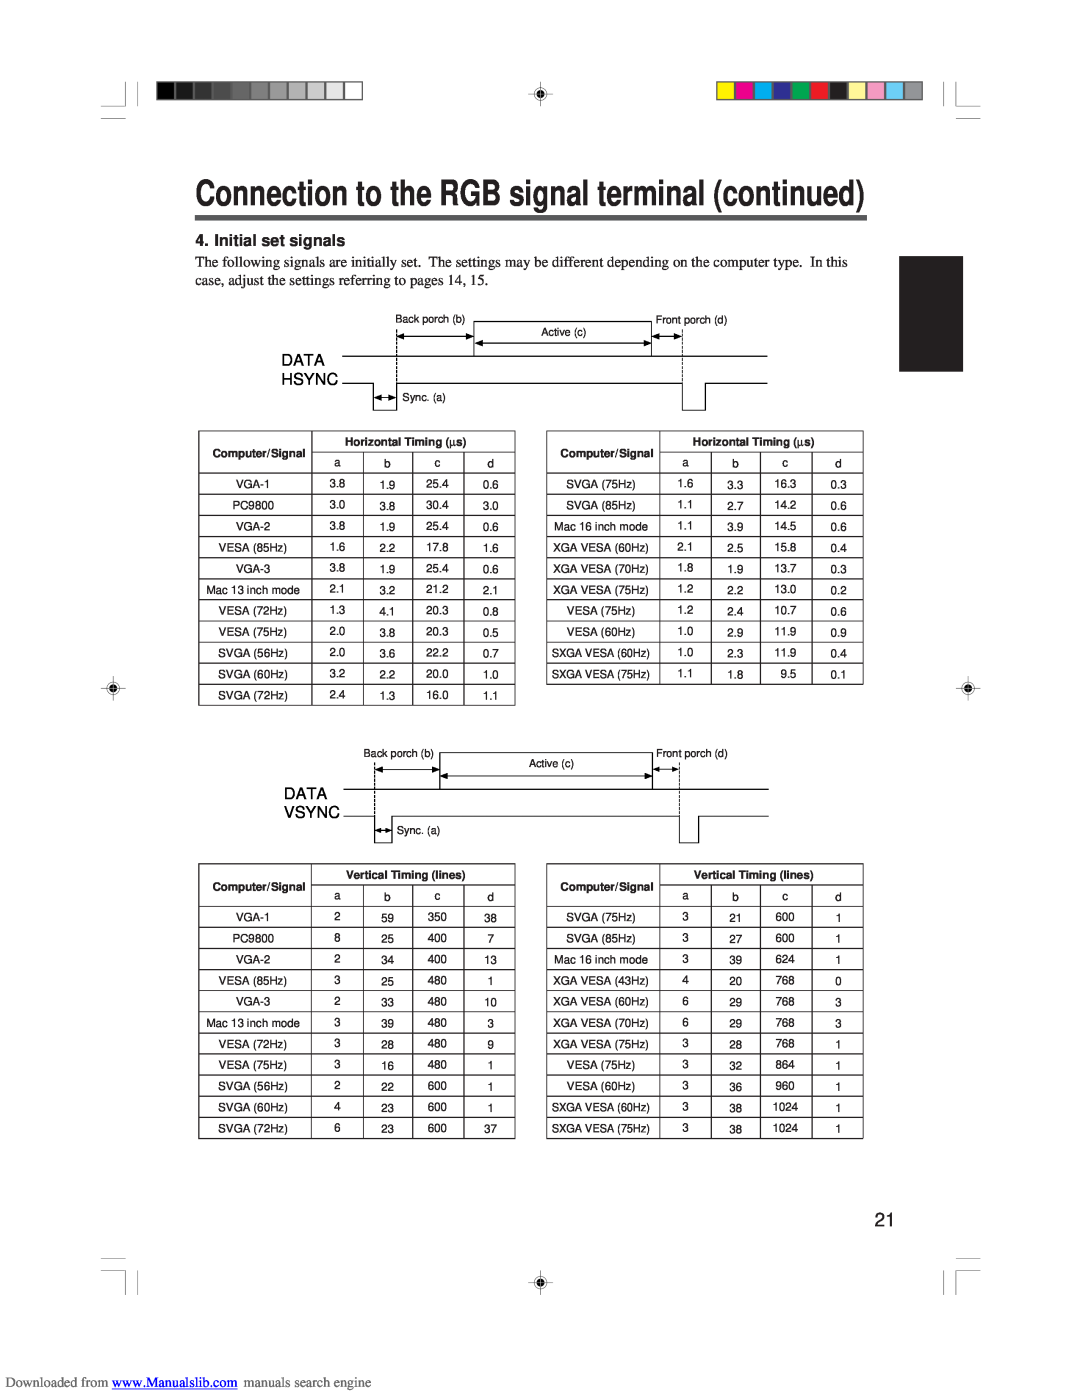 Hitachi CP-X955E Connection to the RGB signal terminal continued, Initial set signals, Data Hsync, Data Vsync 